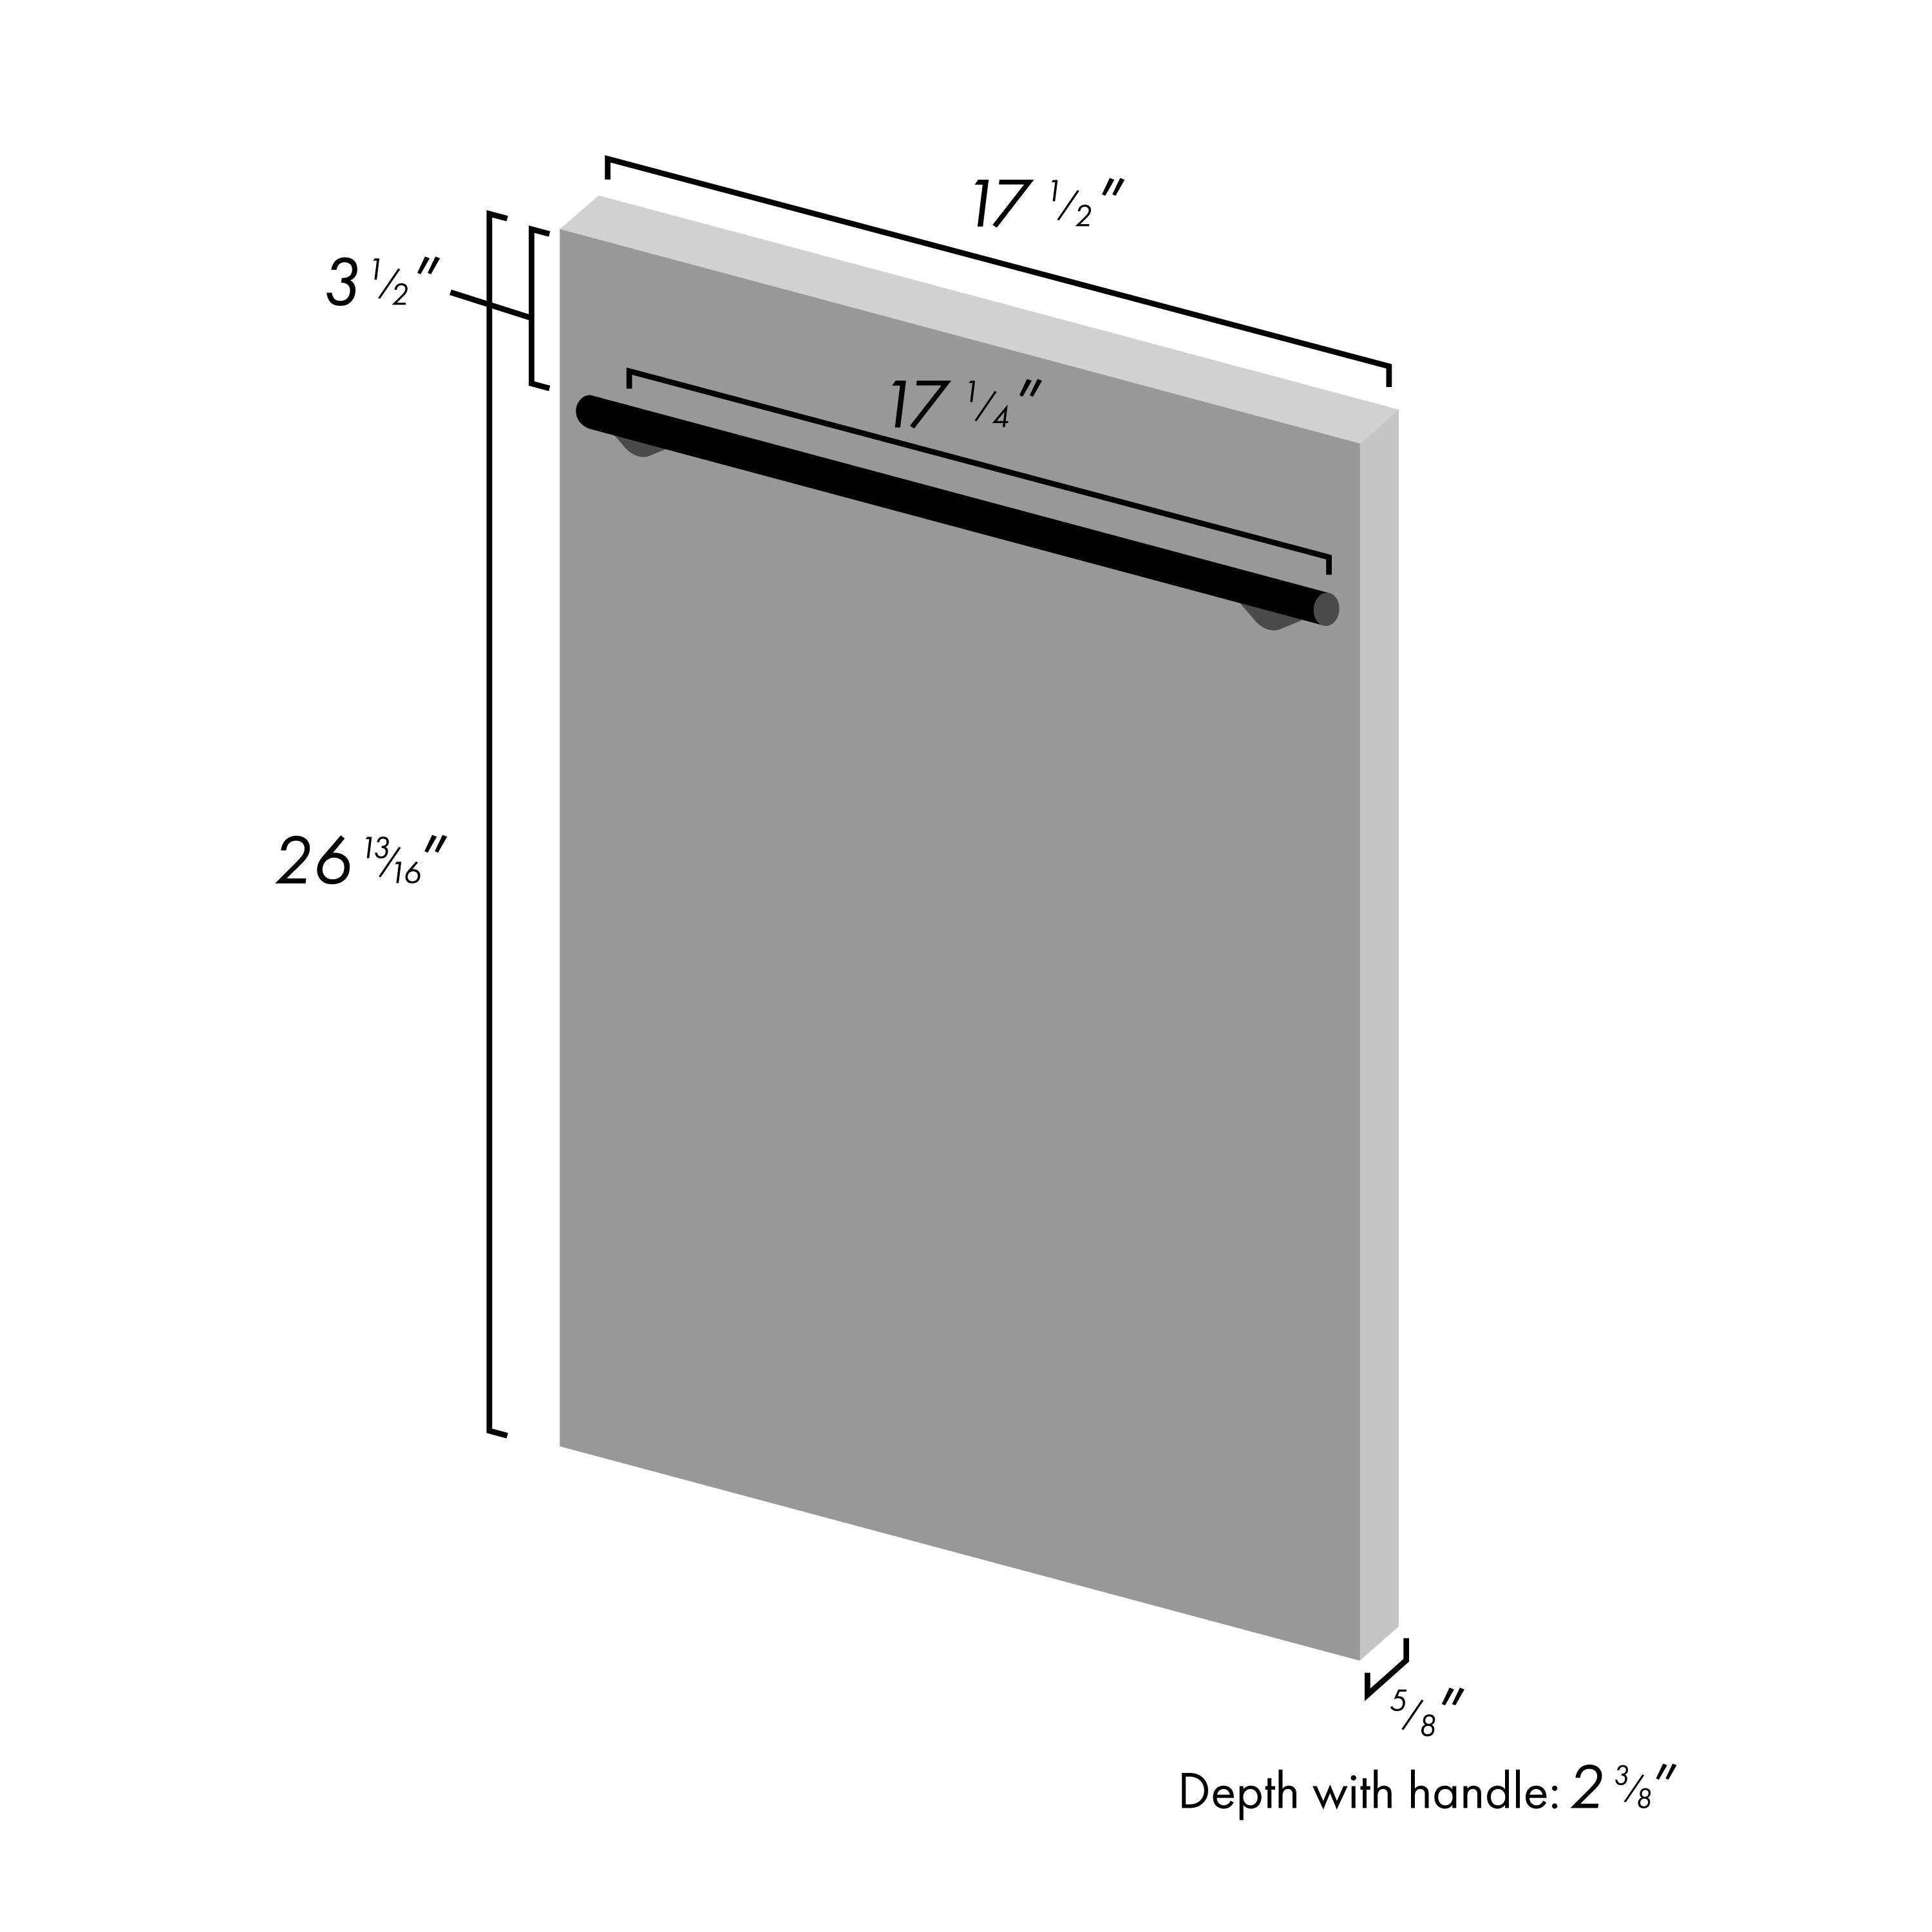 ZLINE 18" Dishwasher Panel in Copper with Modern Handle (DP-C-18)